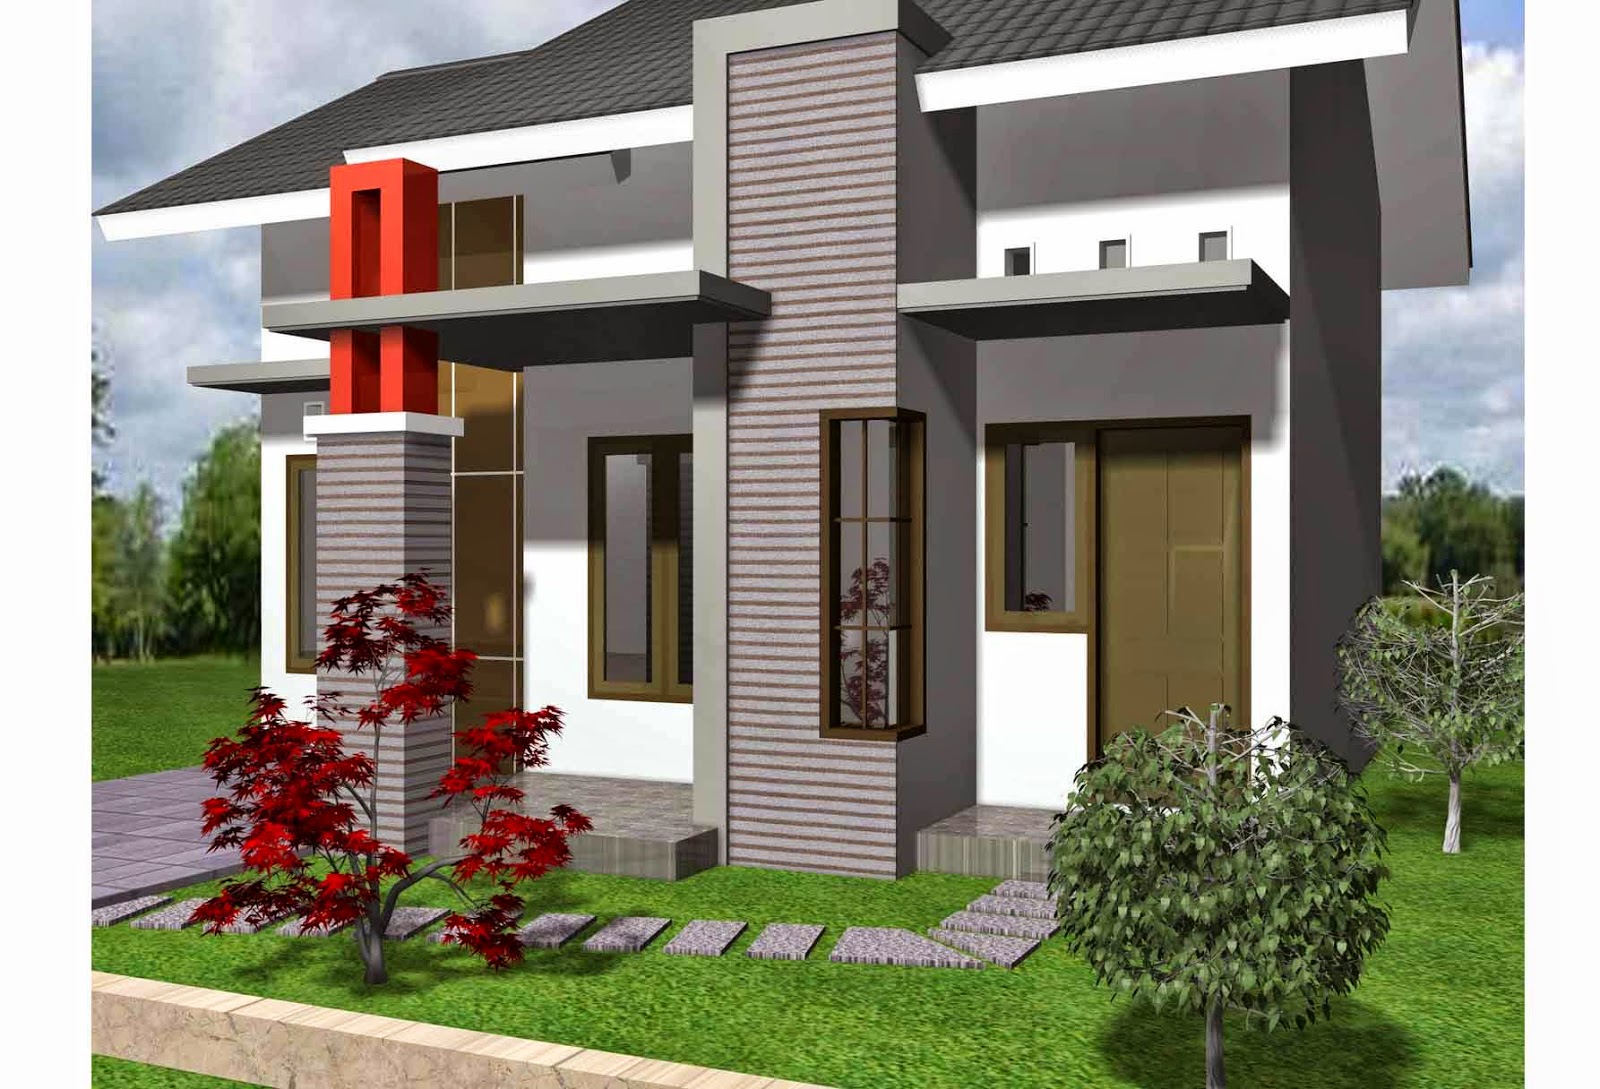  Rumah  Minimalis  Modern Satu  Lantai  Dilahan Luas Maupun Sempit 2022 Cafe Elwazeen